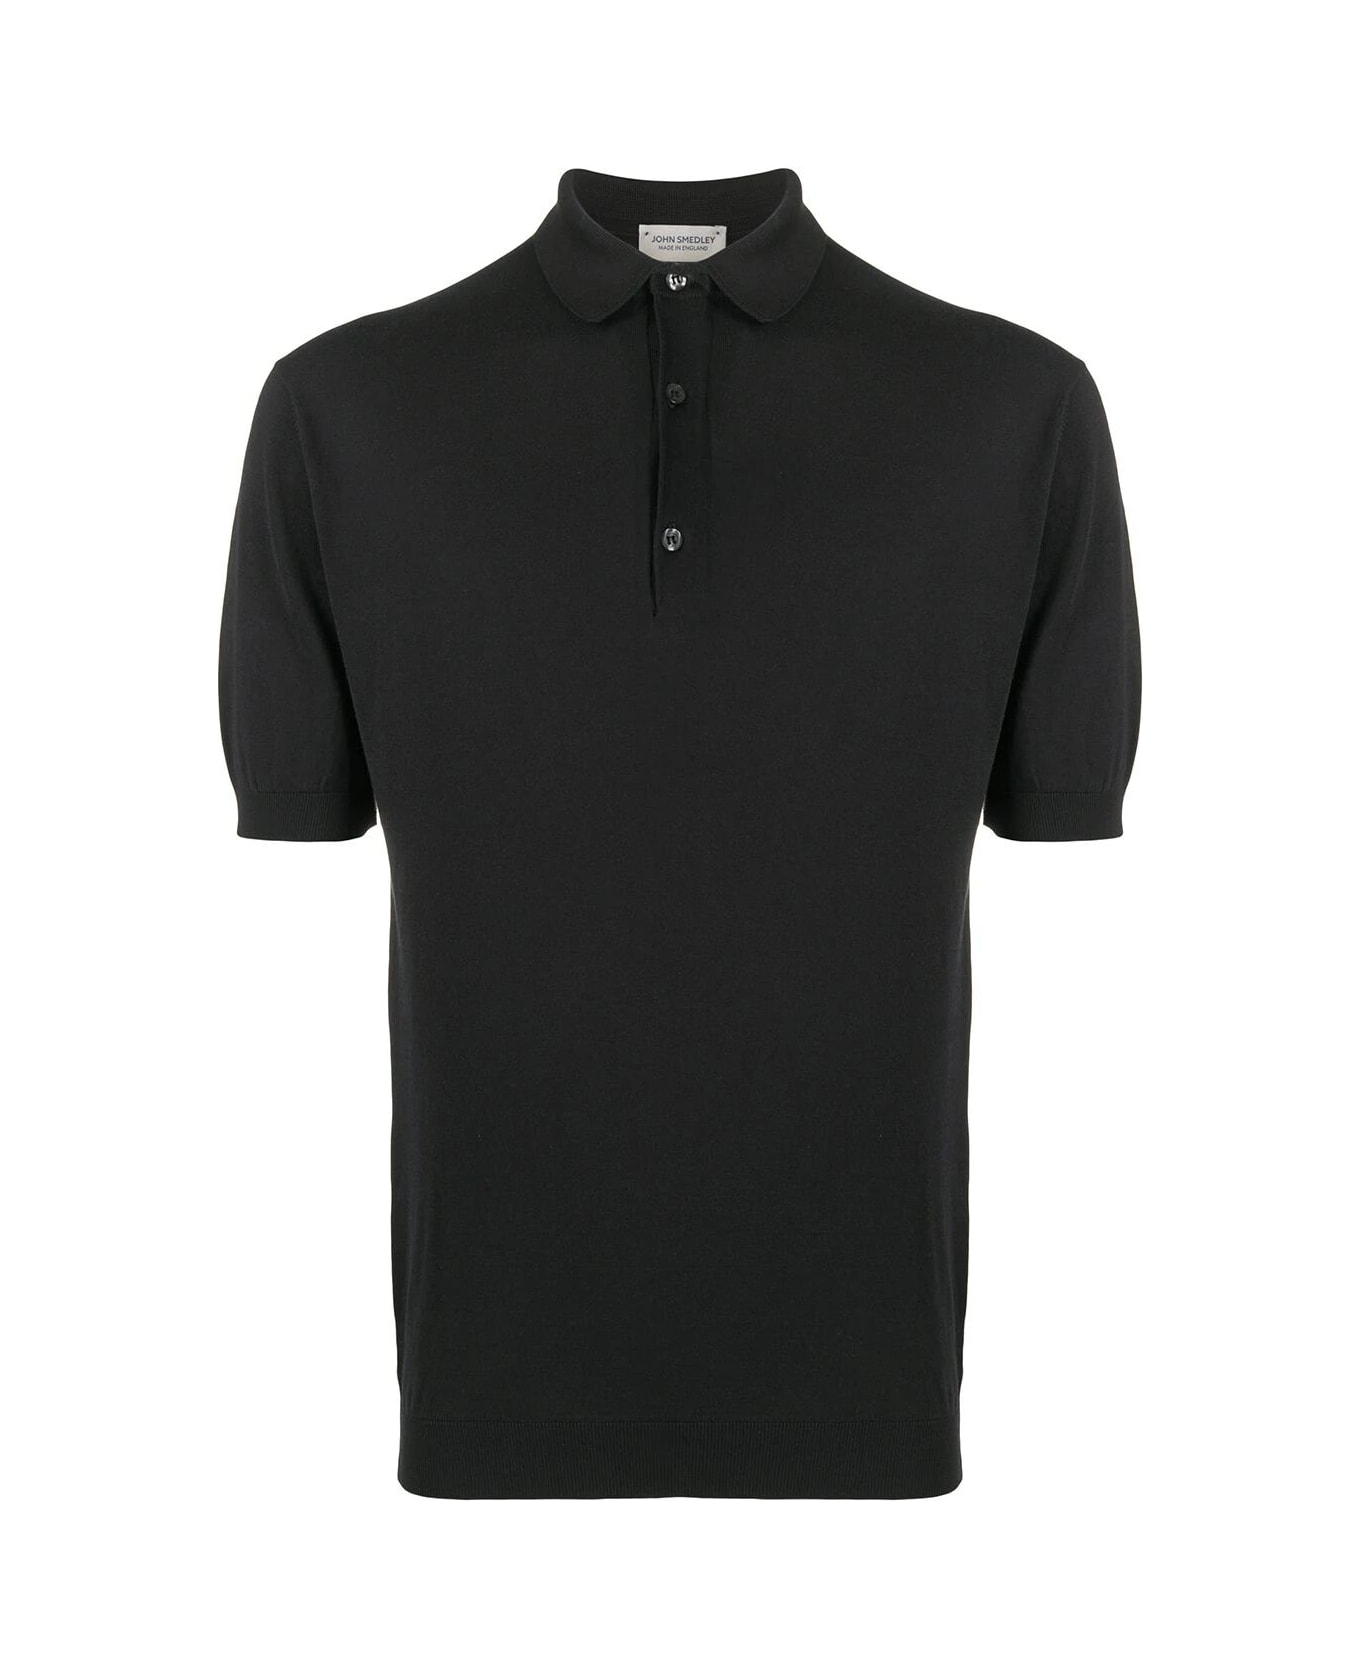 John Smedley Adrian Short Sleeves Shirt - Black